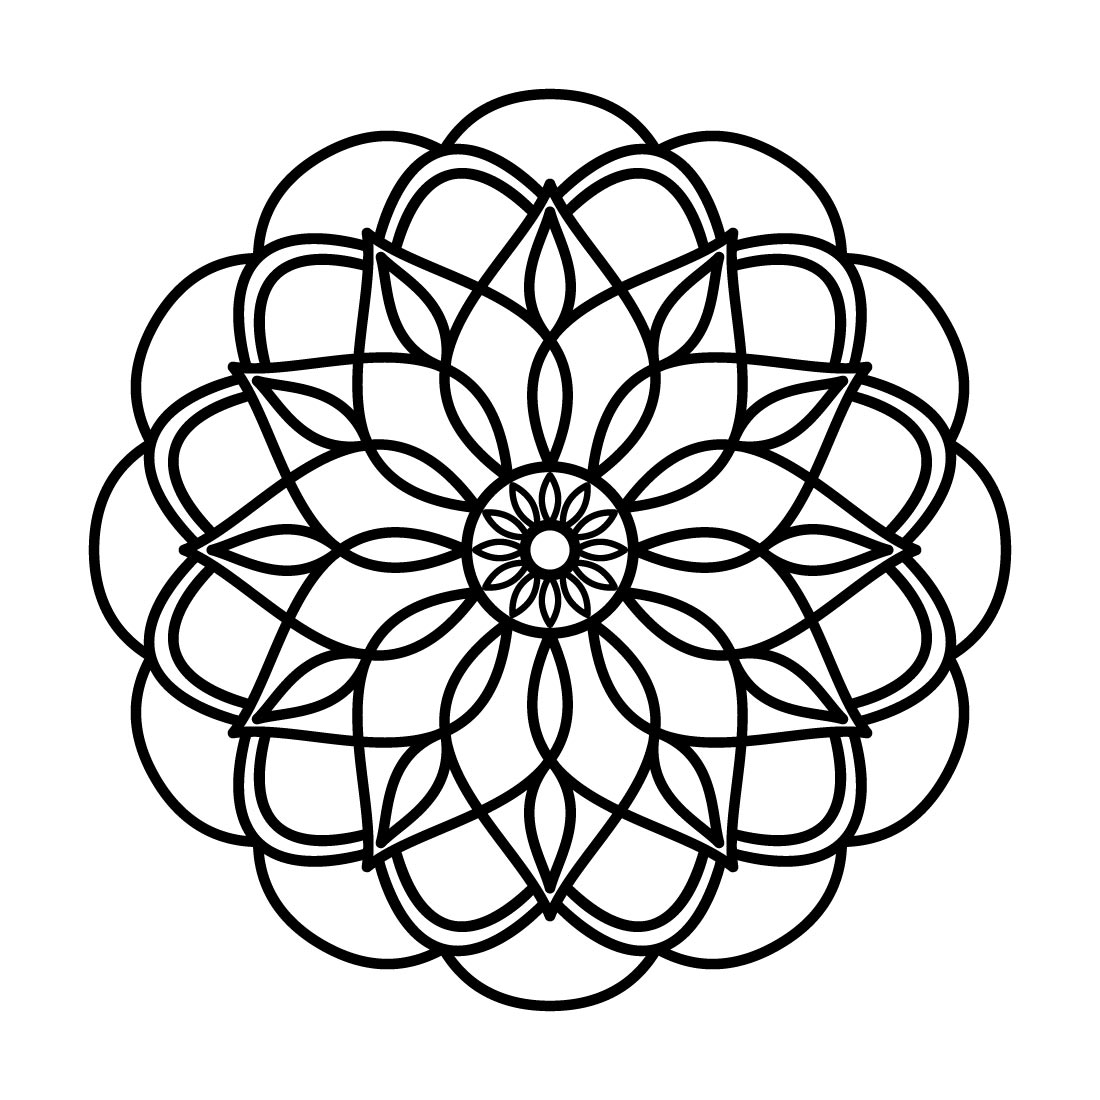 Abstract kaleidoscope ornament round geometric mandala coloring book